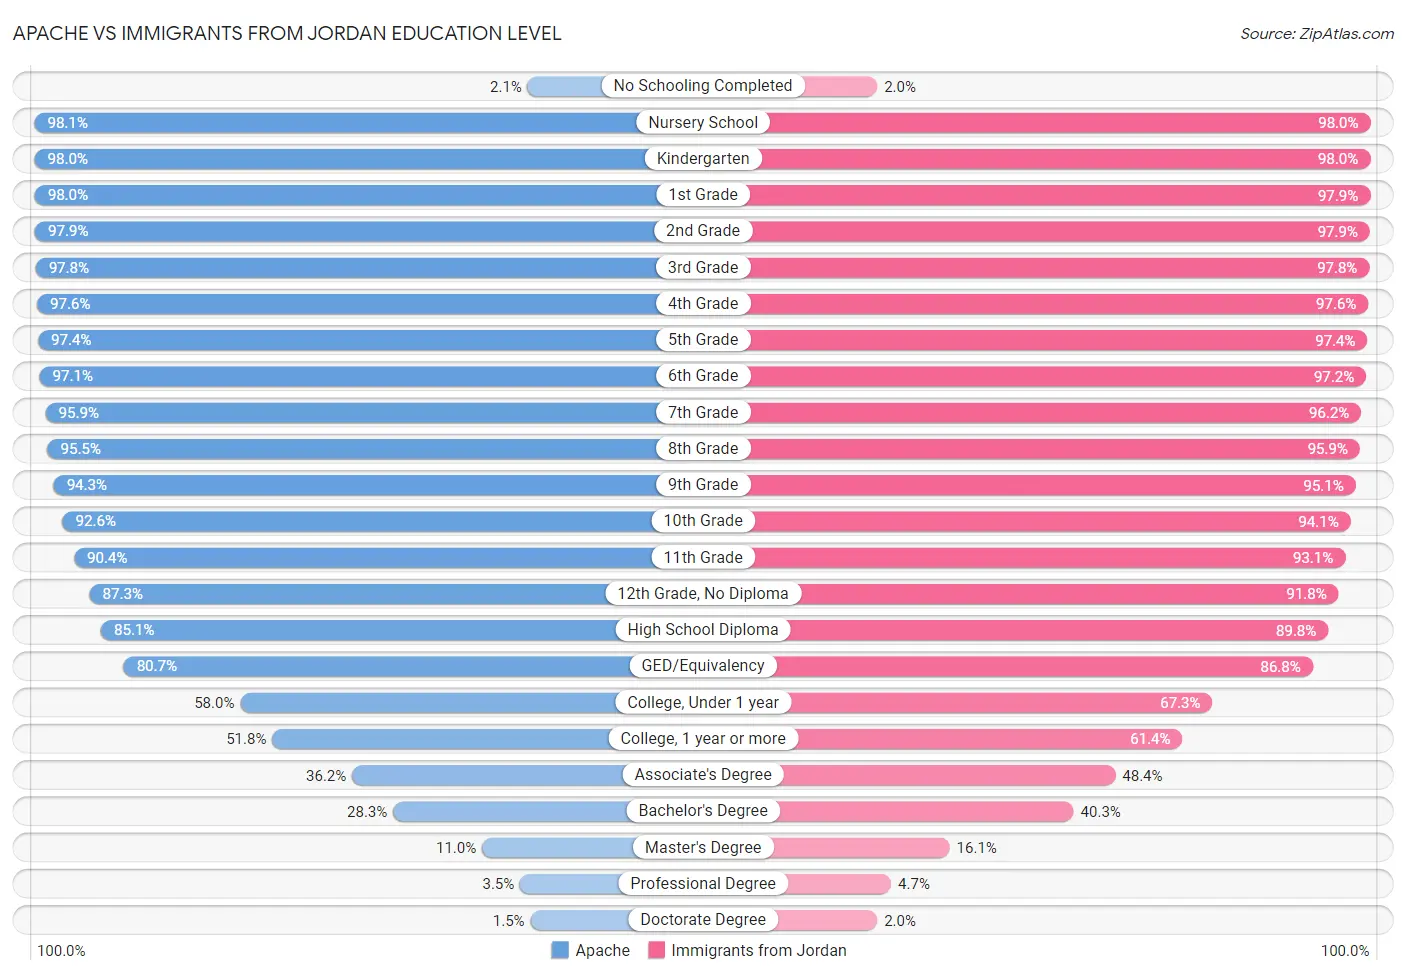 Apache vs Immigrants from Jordan Education Level